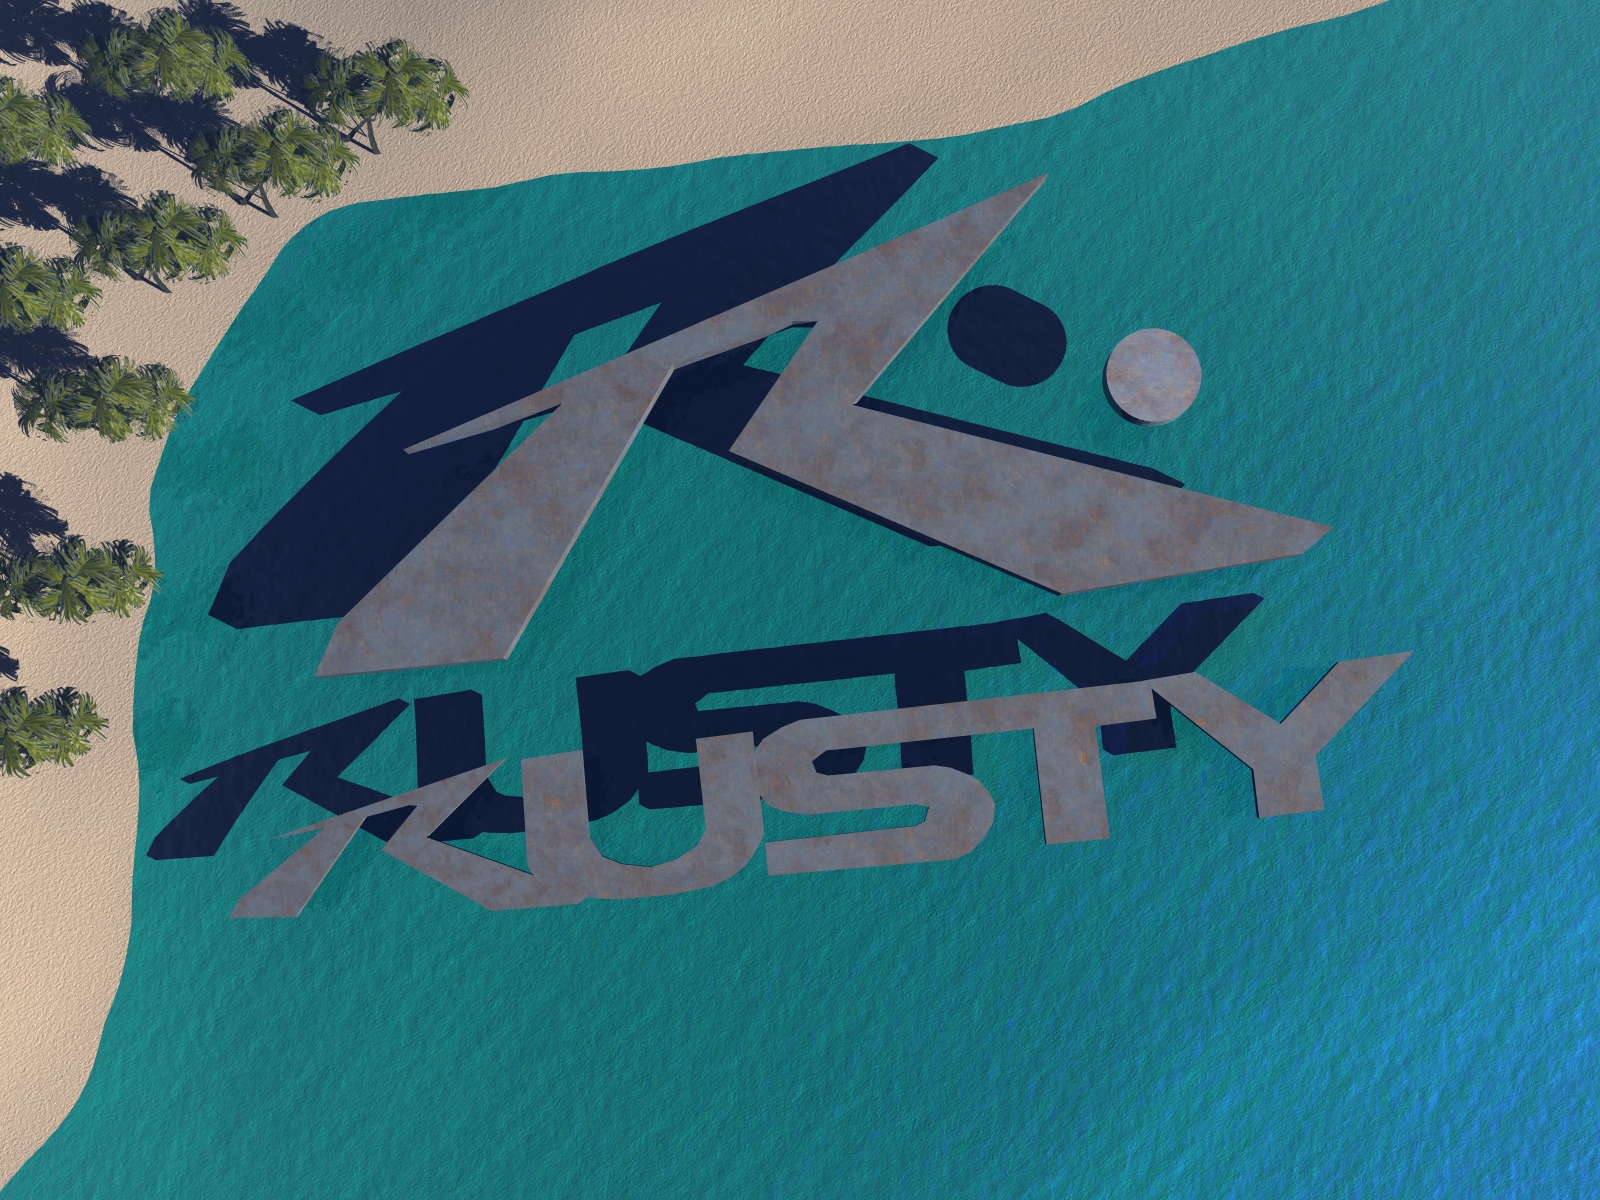 Rusty moose eu. Раст логотип. Обои logo 62. УННВ логотип на обои. Rusty Rivers logo.